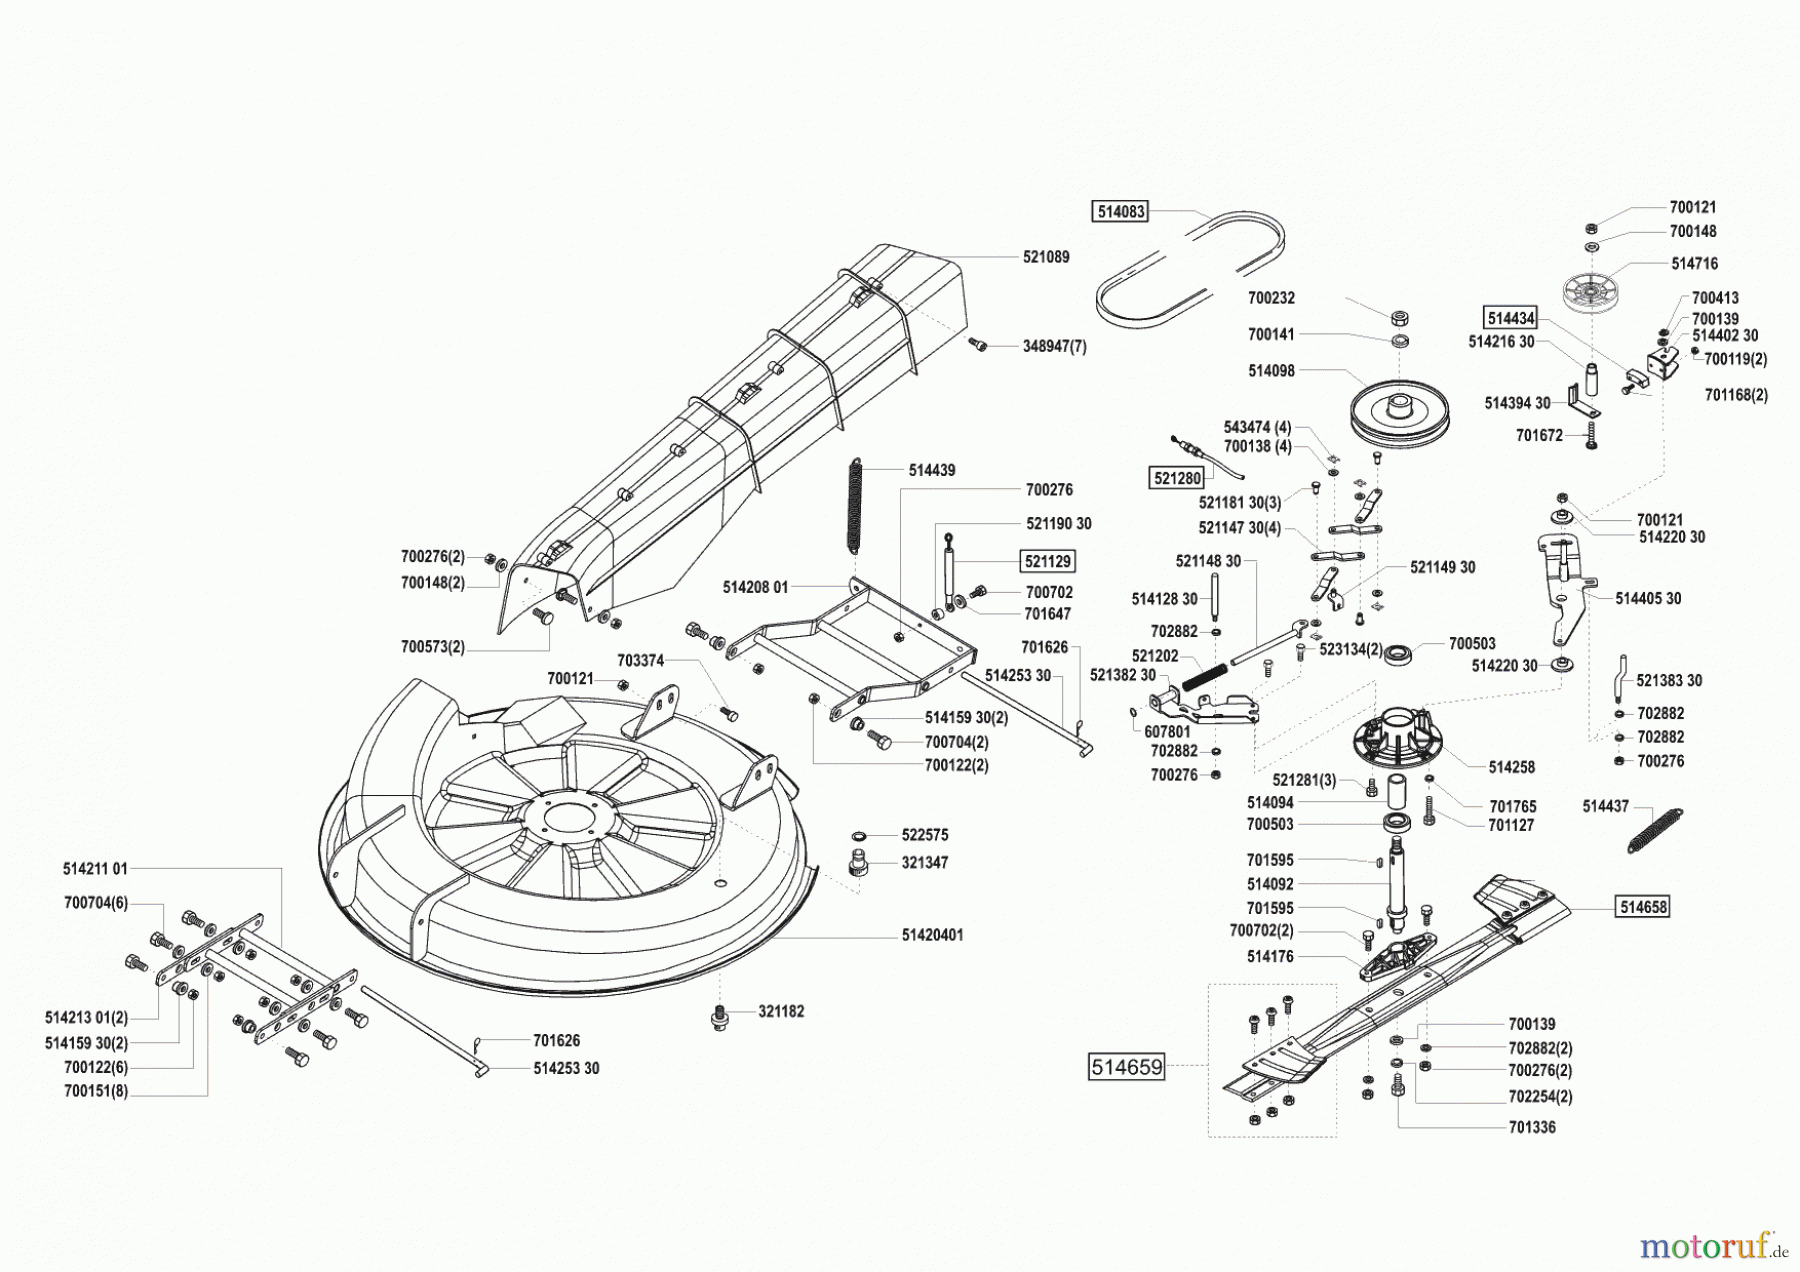  AL-KO Gartentechnik Rasentraktor T 900 ab 01/2002 Seite 5